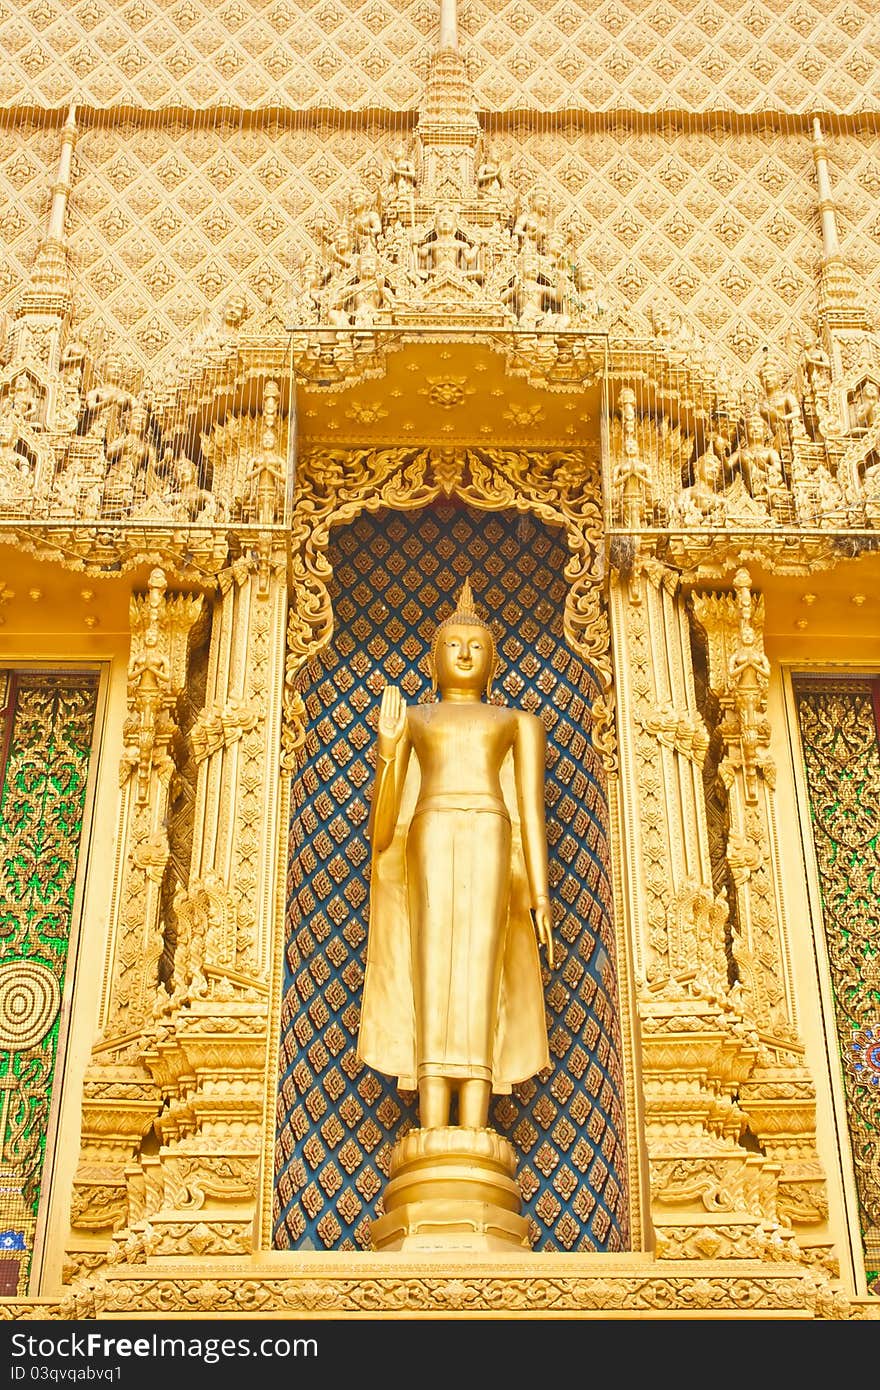 Buddha immage at church's wall of Phra sri aun Temple ,Thailand